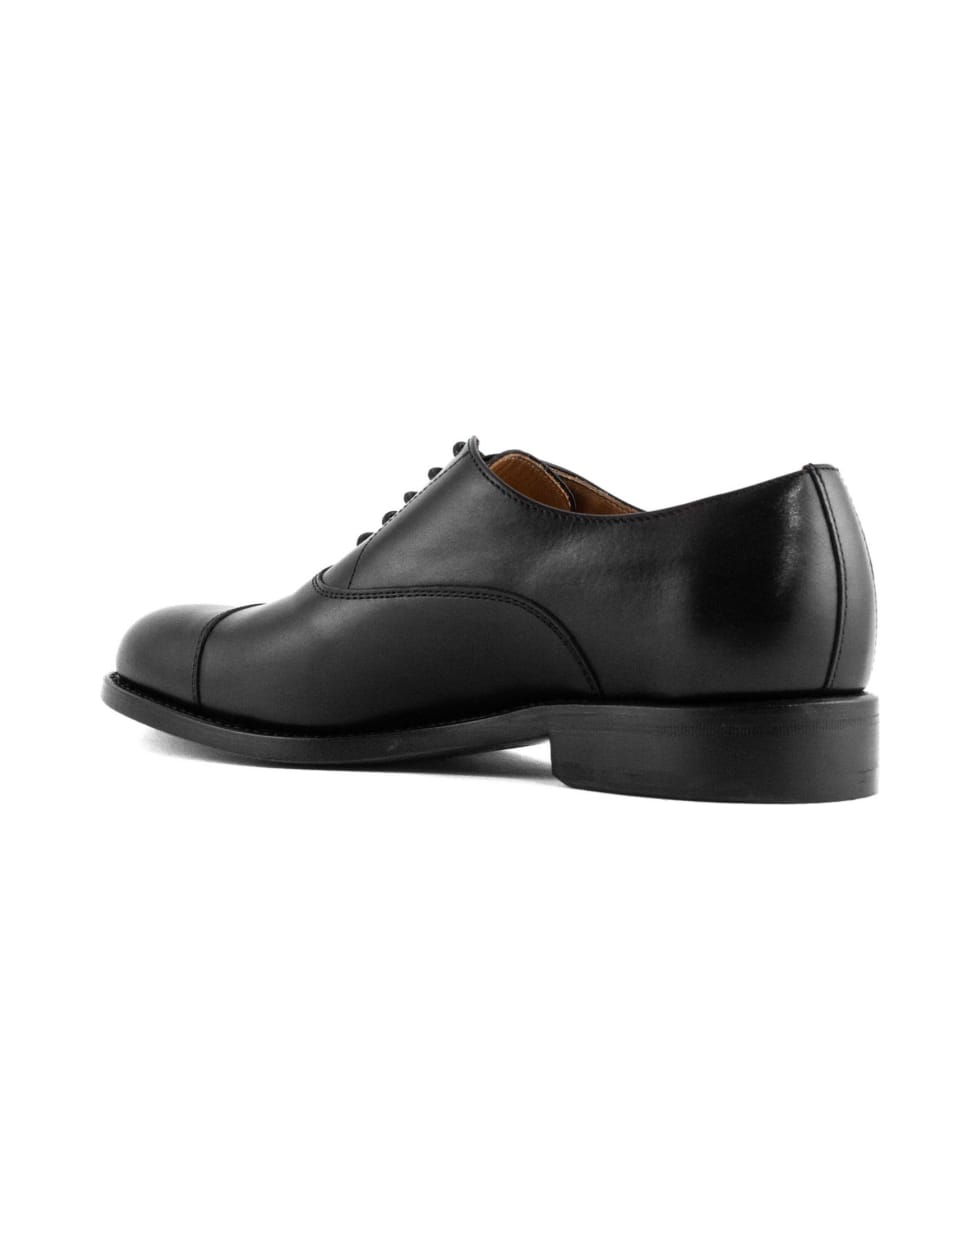 Berwick 1707 Black Calfskin Oxford Style Shoes - Nero